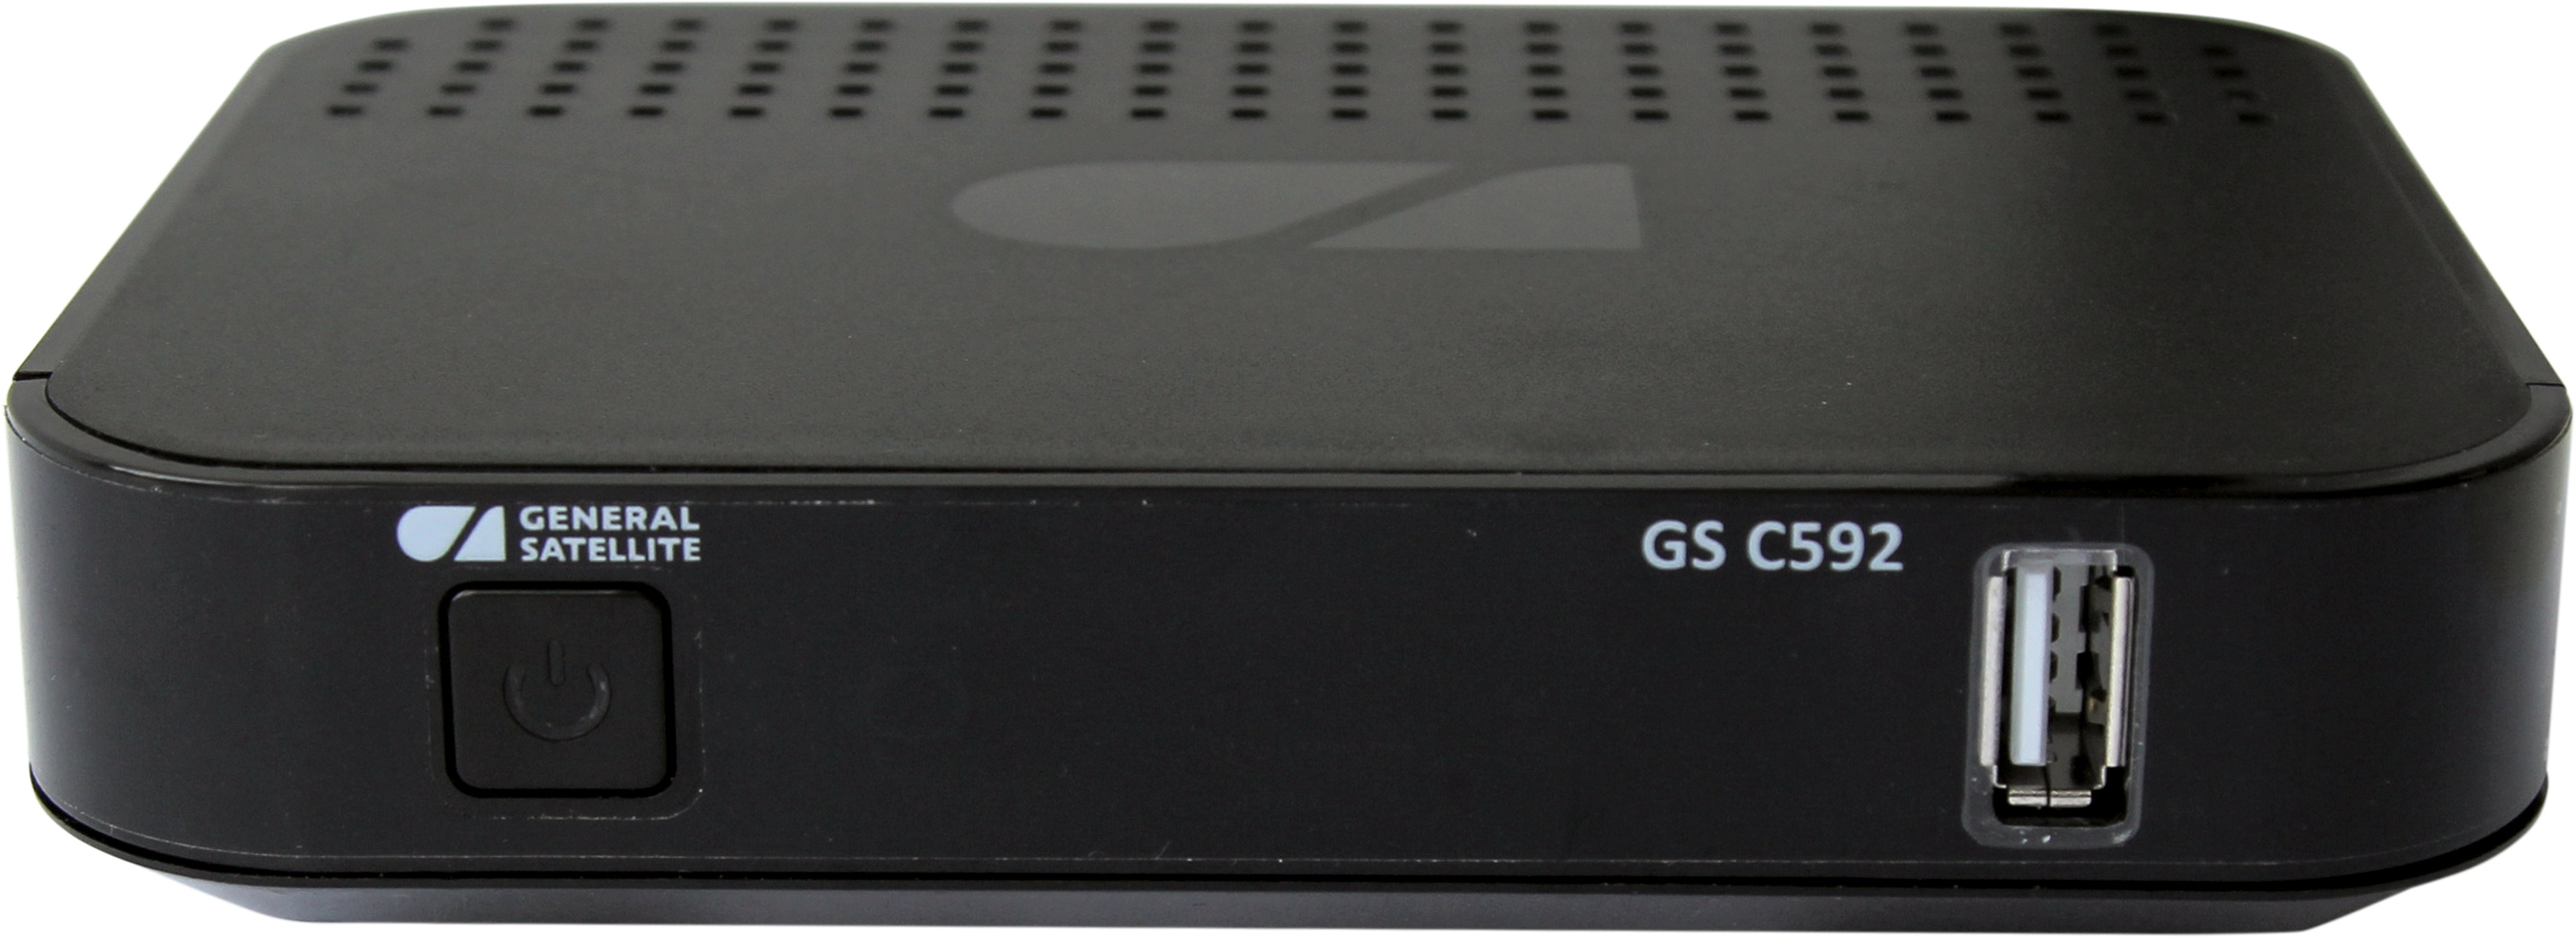 GS С592